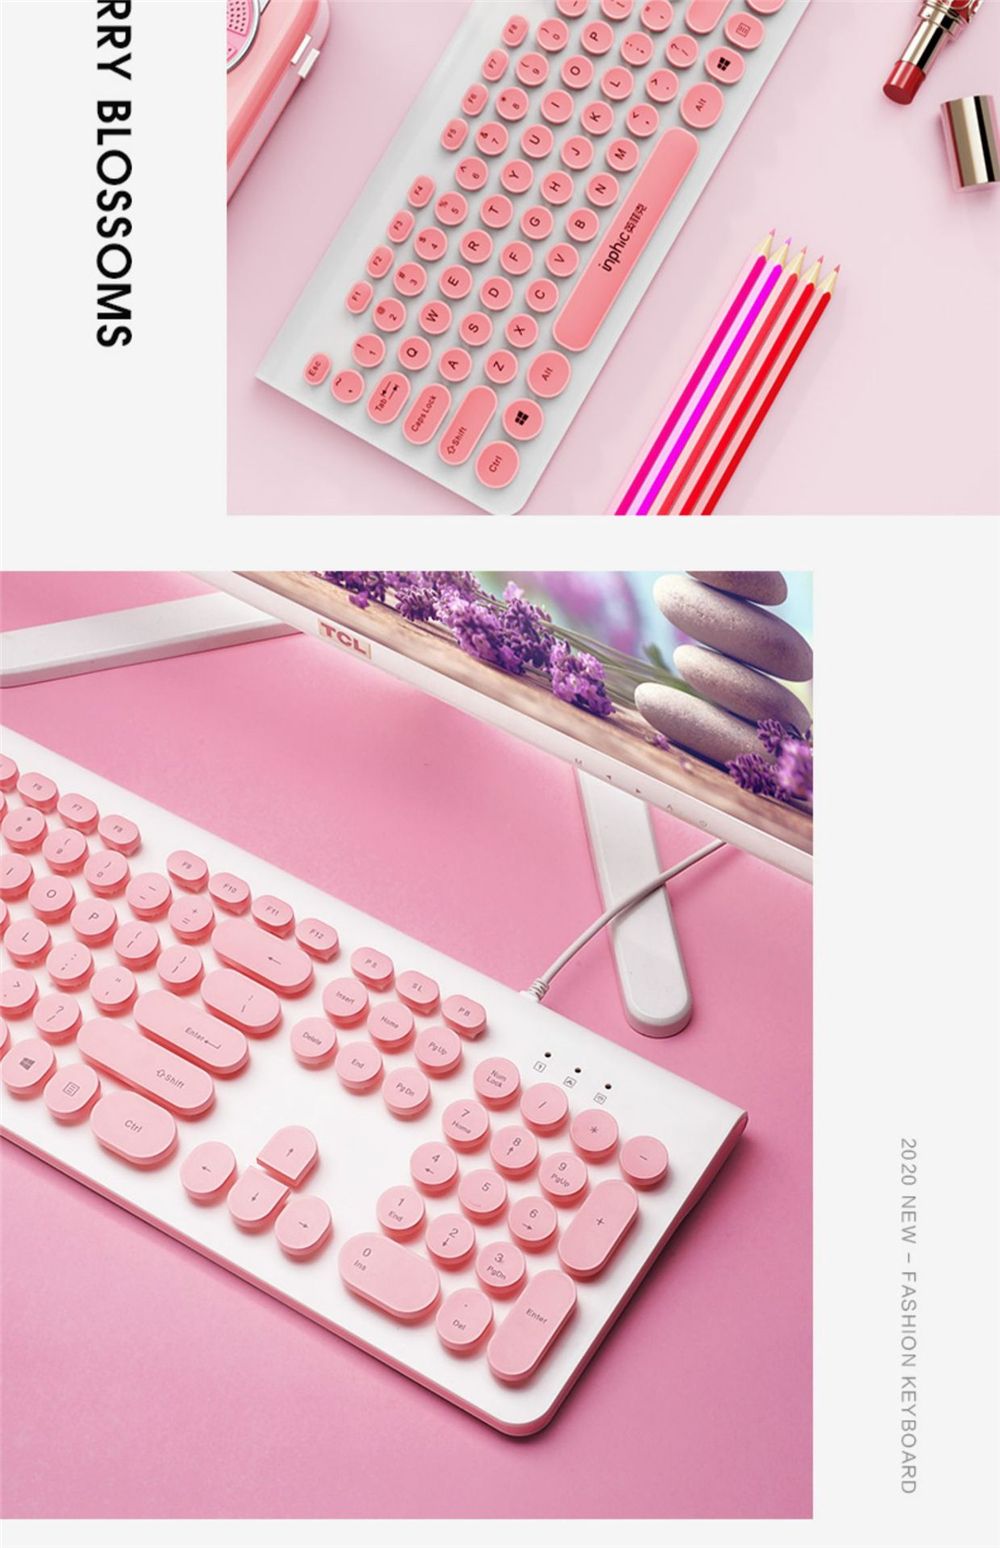 INPHIC-V580P-104-Keys-Wired-Keyboard-Retro-Round-Keycaps-Design-Keyboard-Pink-Black-Typing-Keyboard--1739892